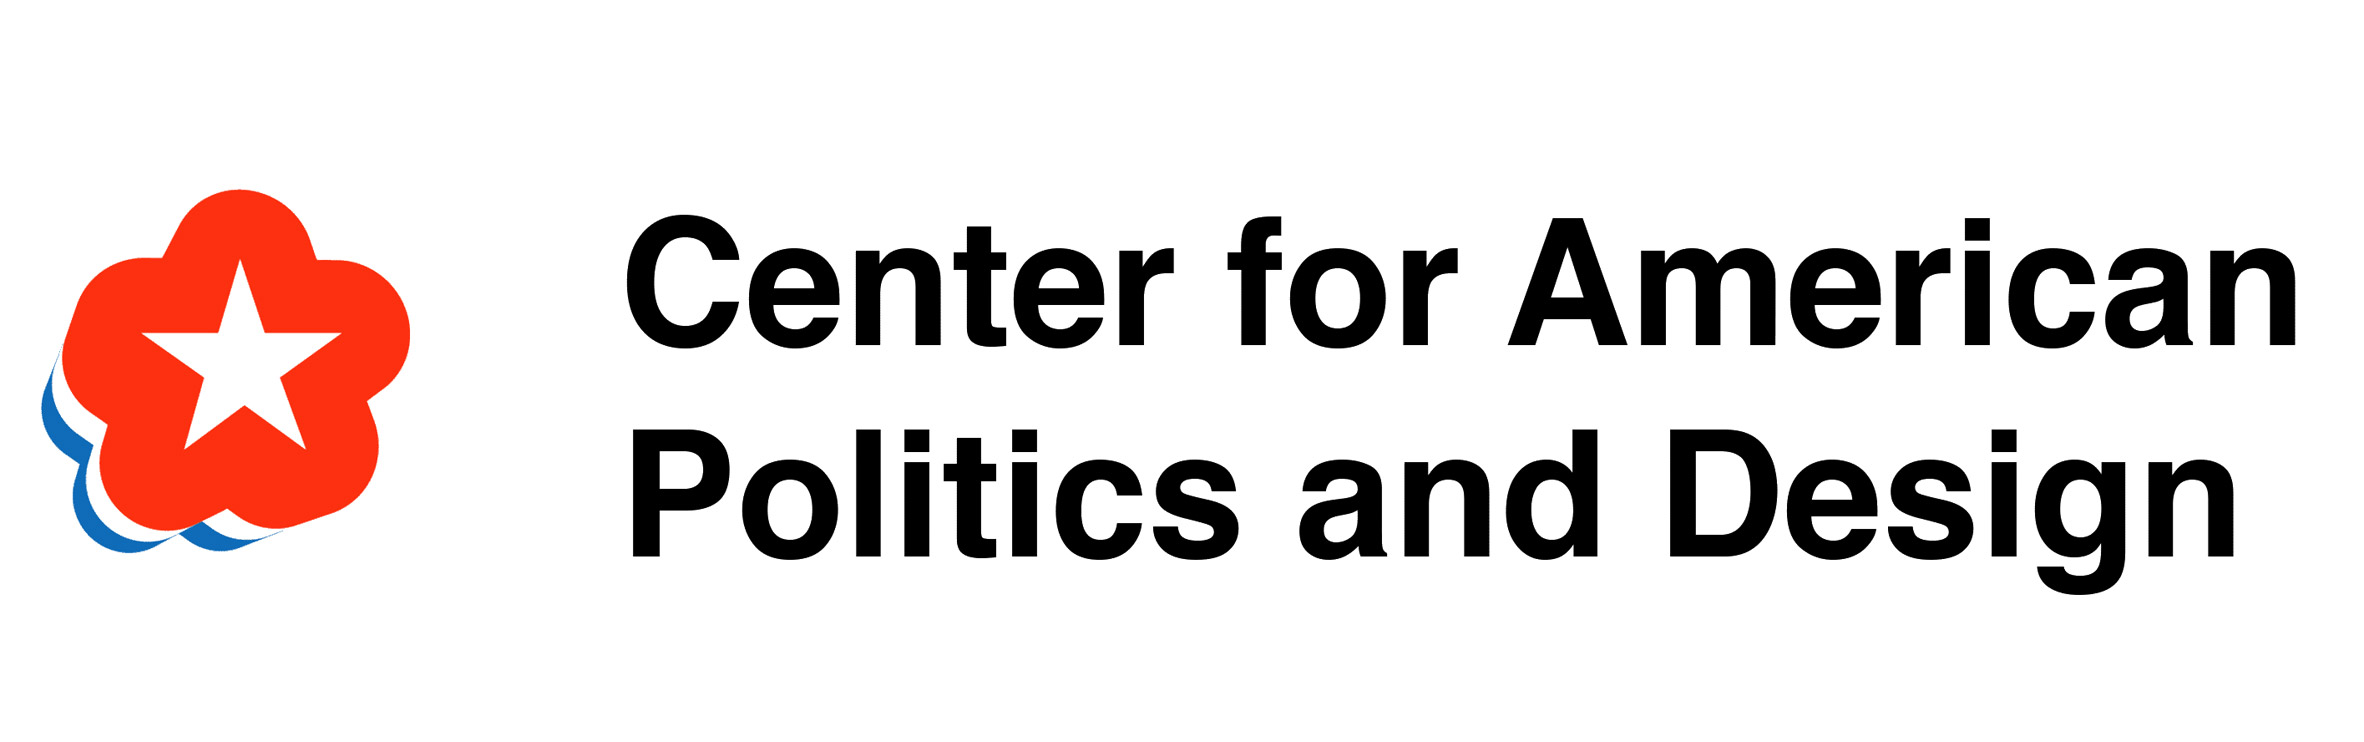 Center For American Design And Politics